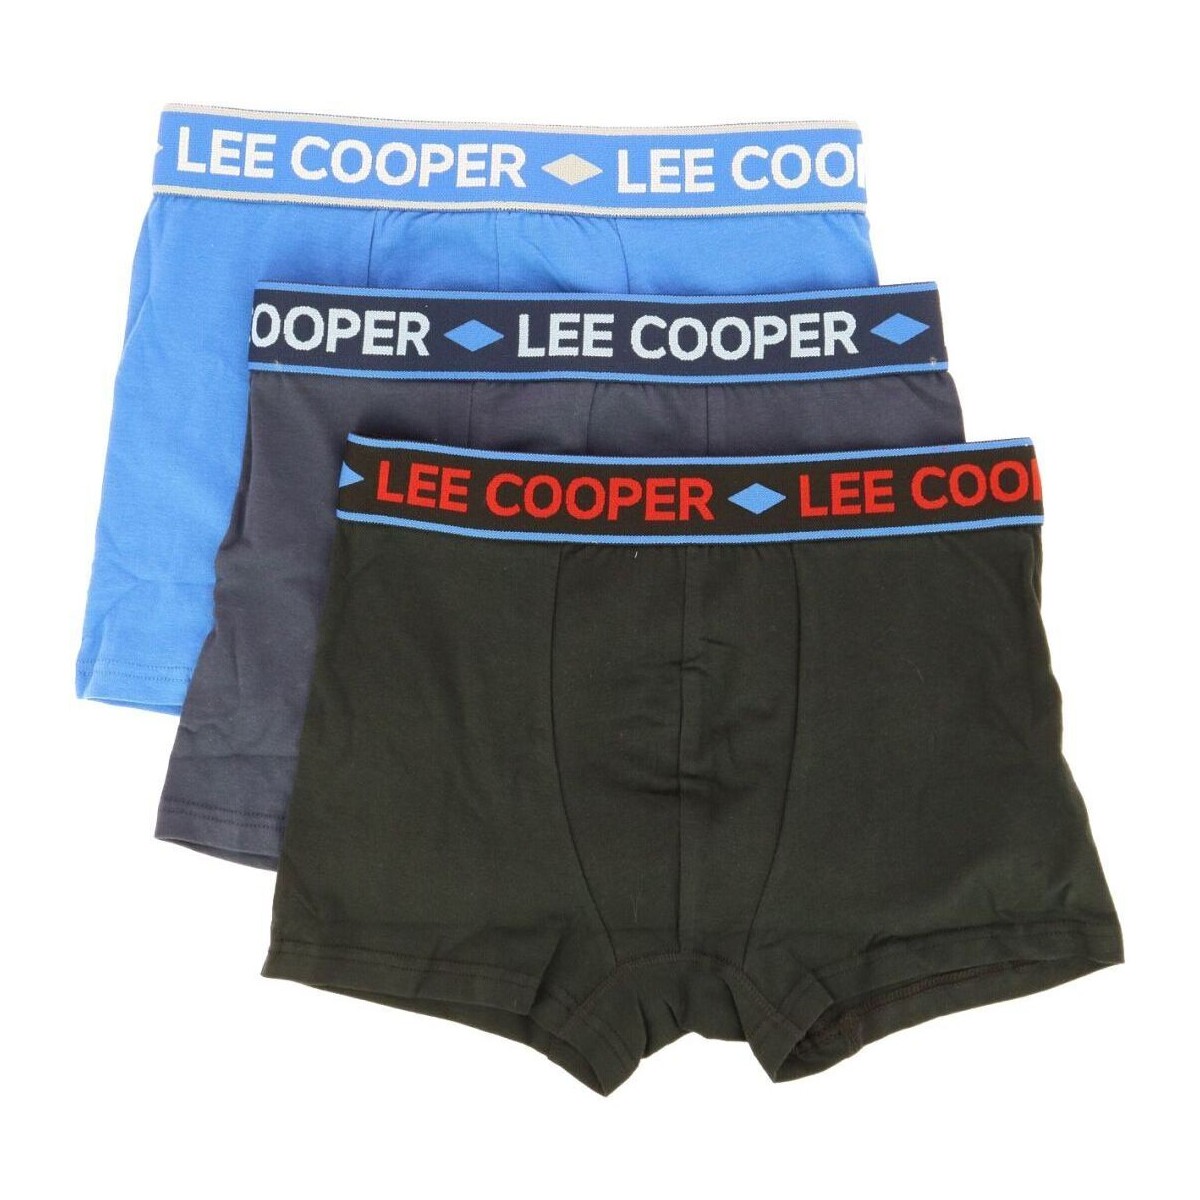 Lee Cooper Multicolore Boxer homme Natan 6GNocygK